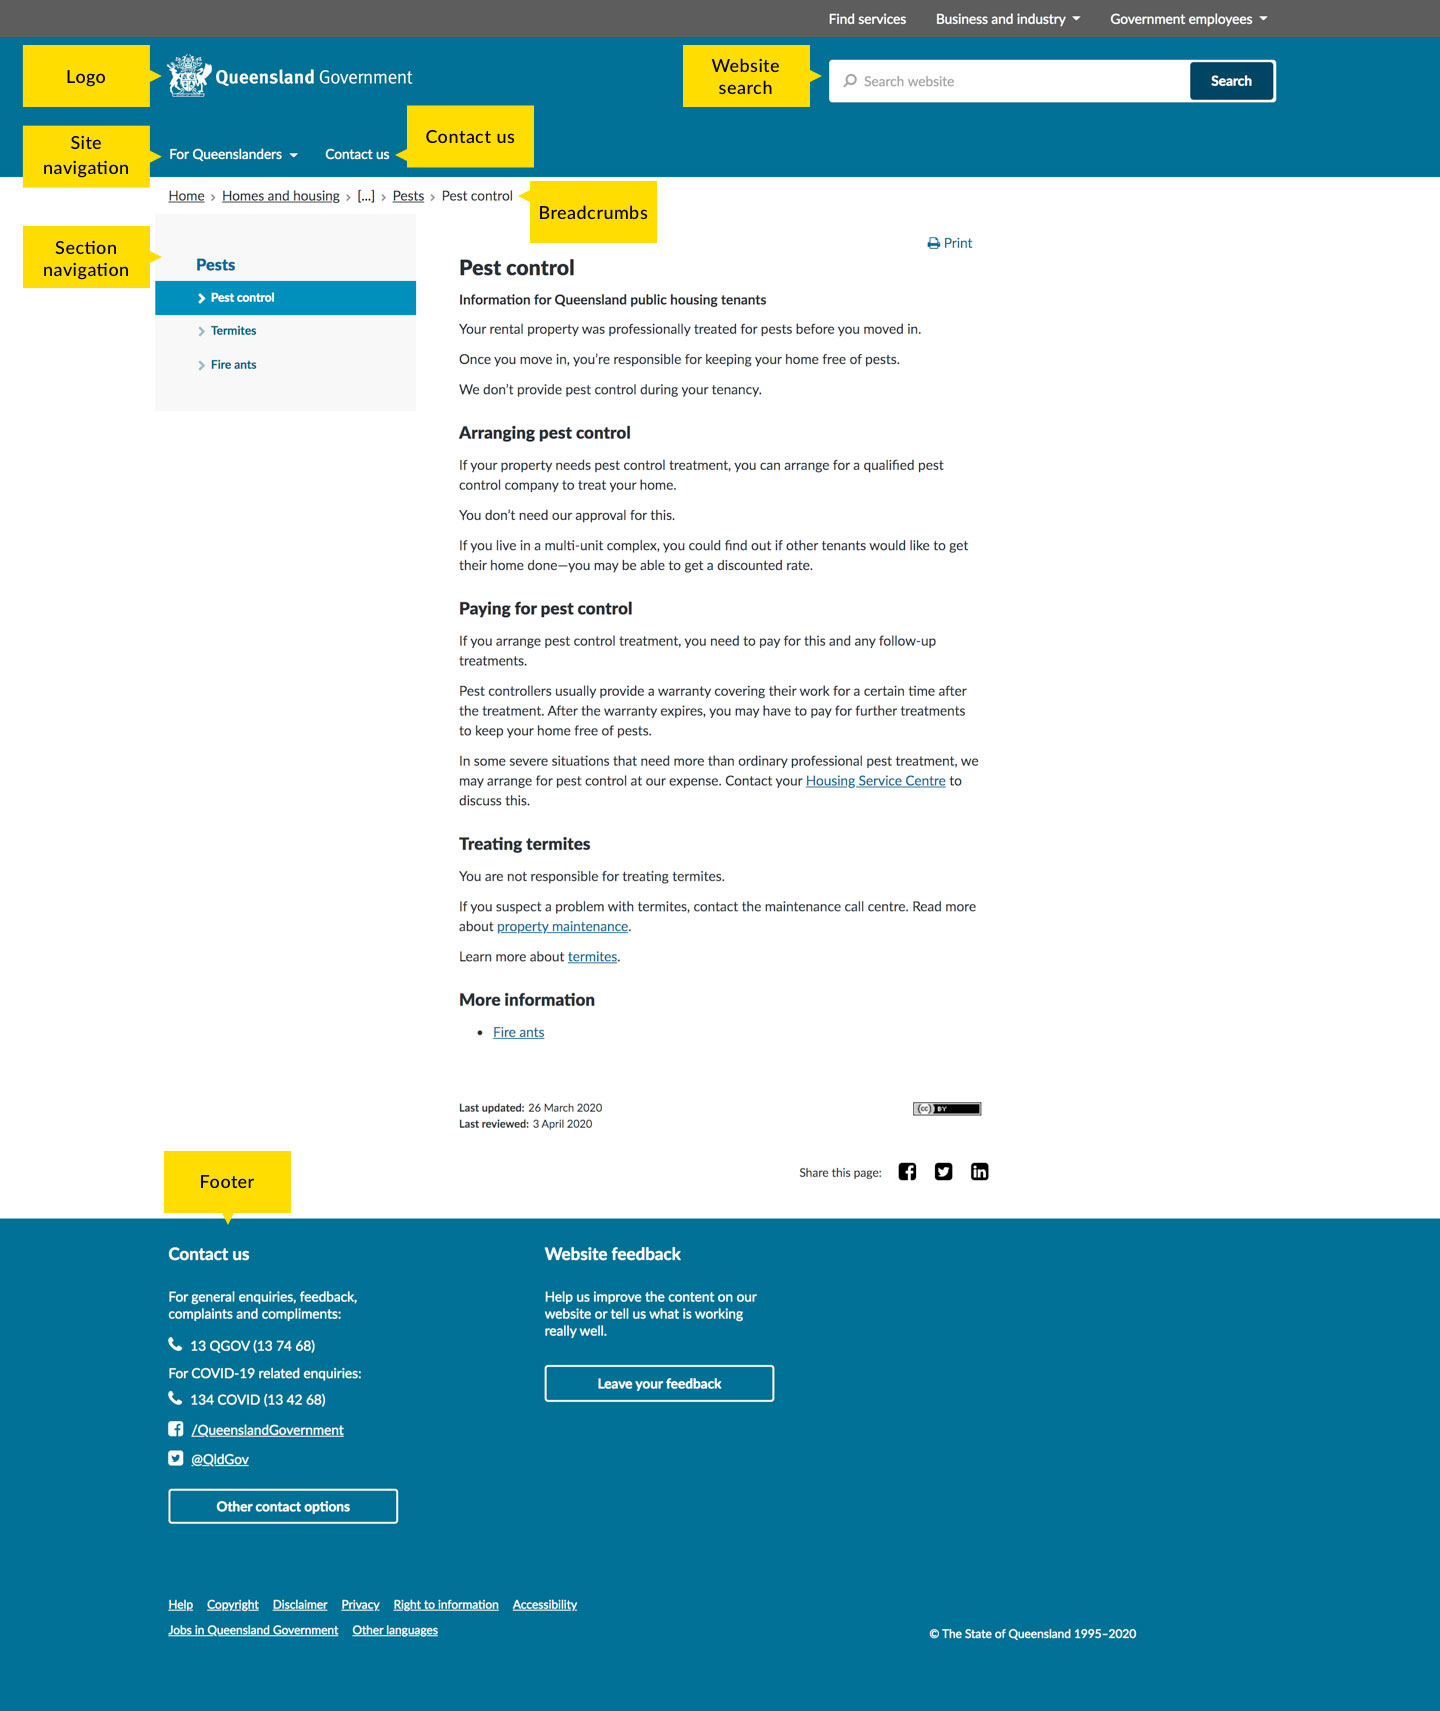 Screenshot identifying the different navigation elements on qld.gov.au